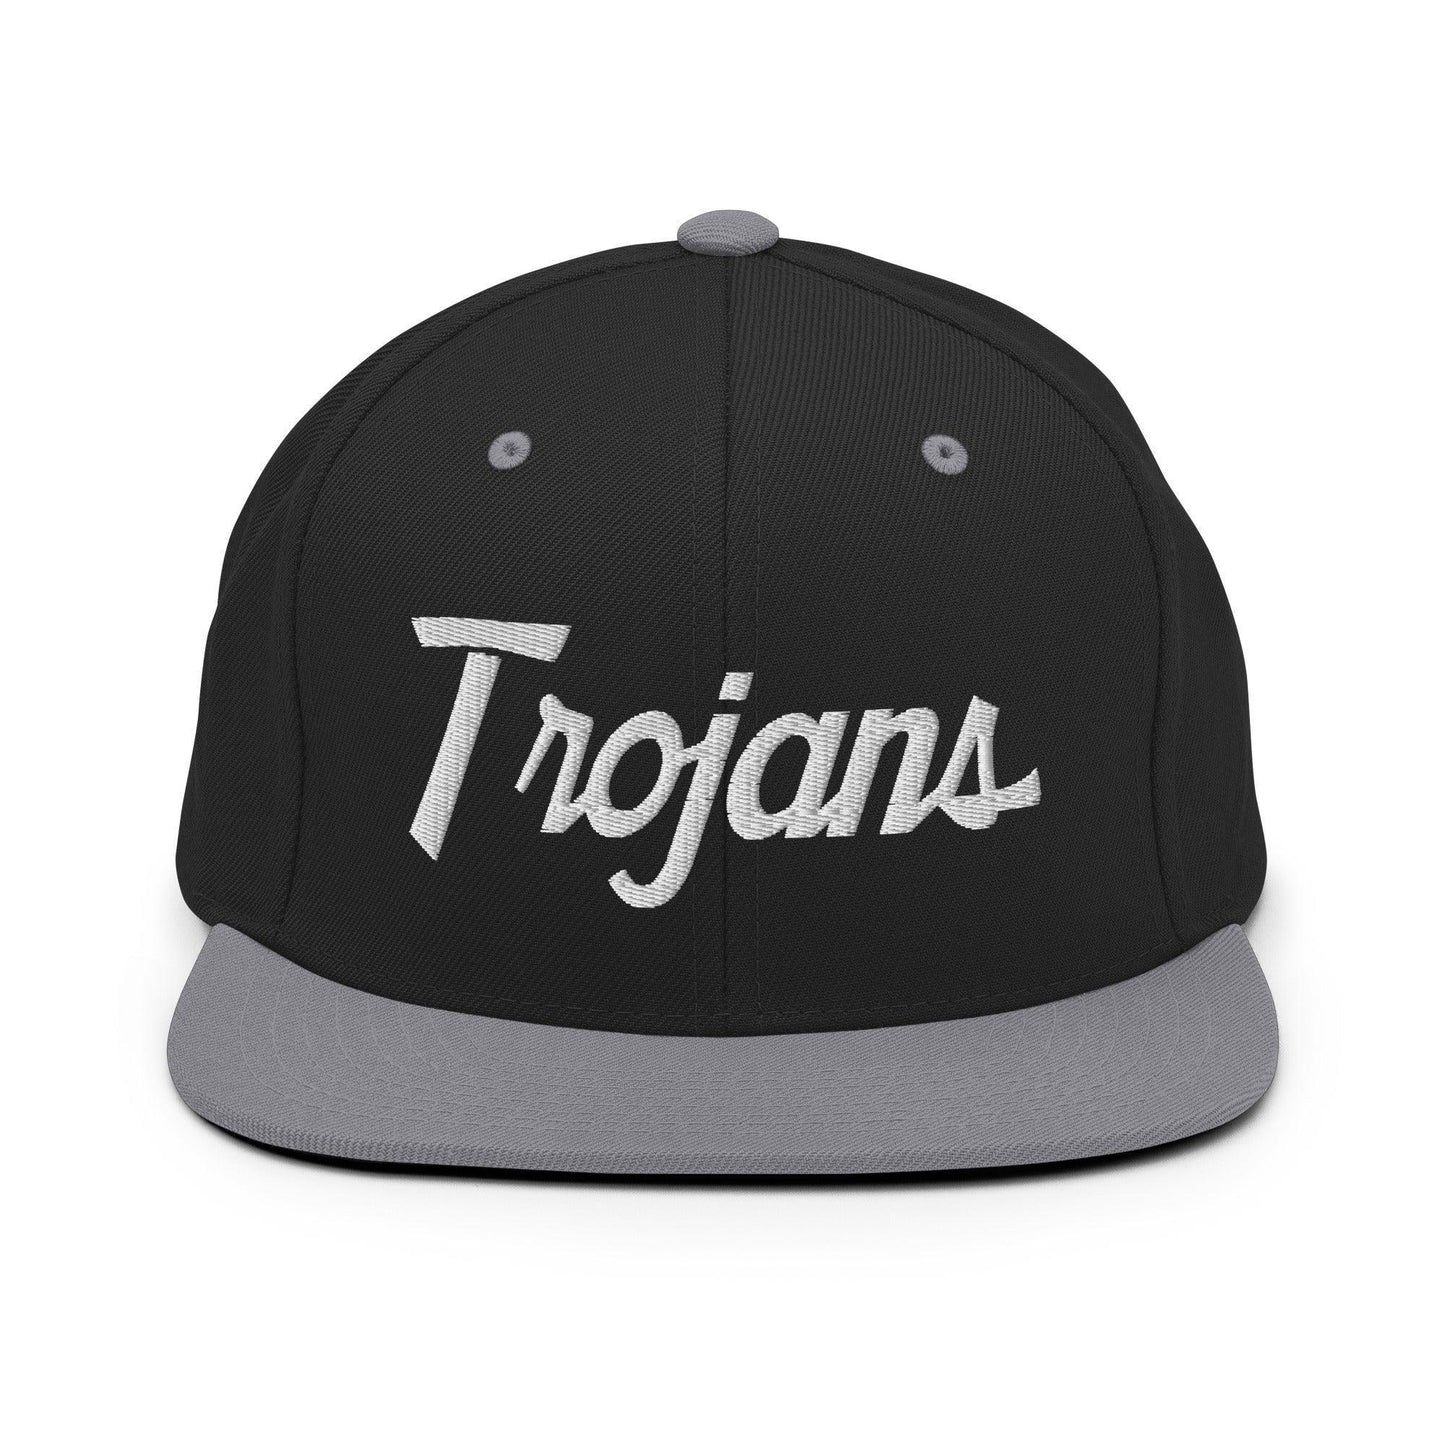 Trojans School Mascot Script Snapback Hat Black Silver